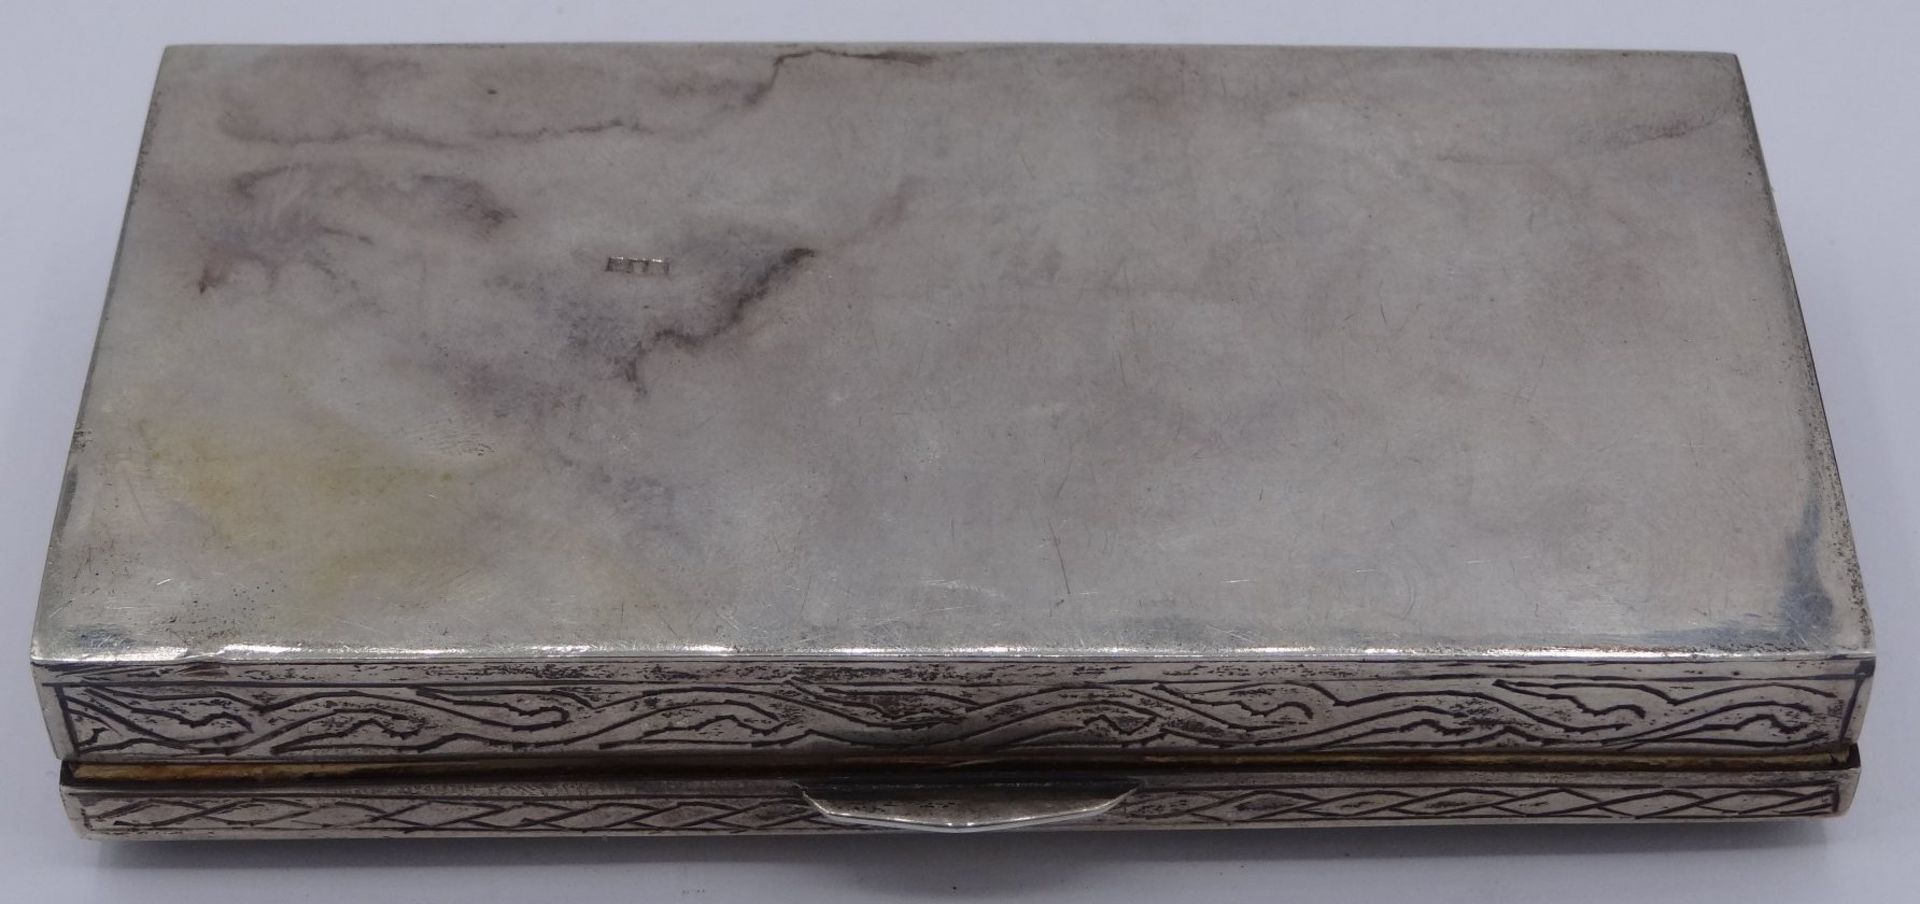 Zigarettendose, Silber-925-, arabisch gepunzt, Deckelscharnier defekt, innen Holz, H-2 cm, 14x7 - Bild 5 aus 7